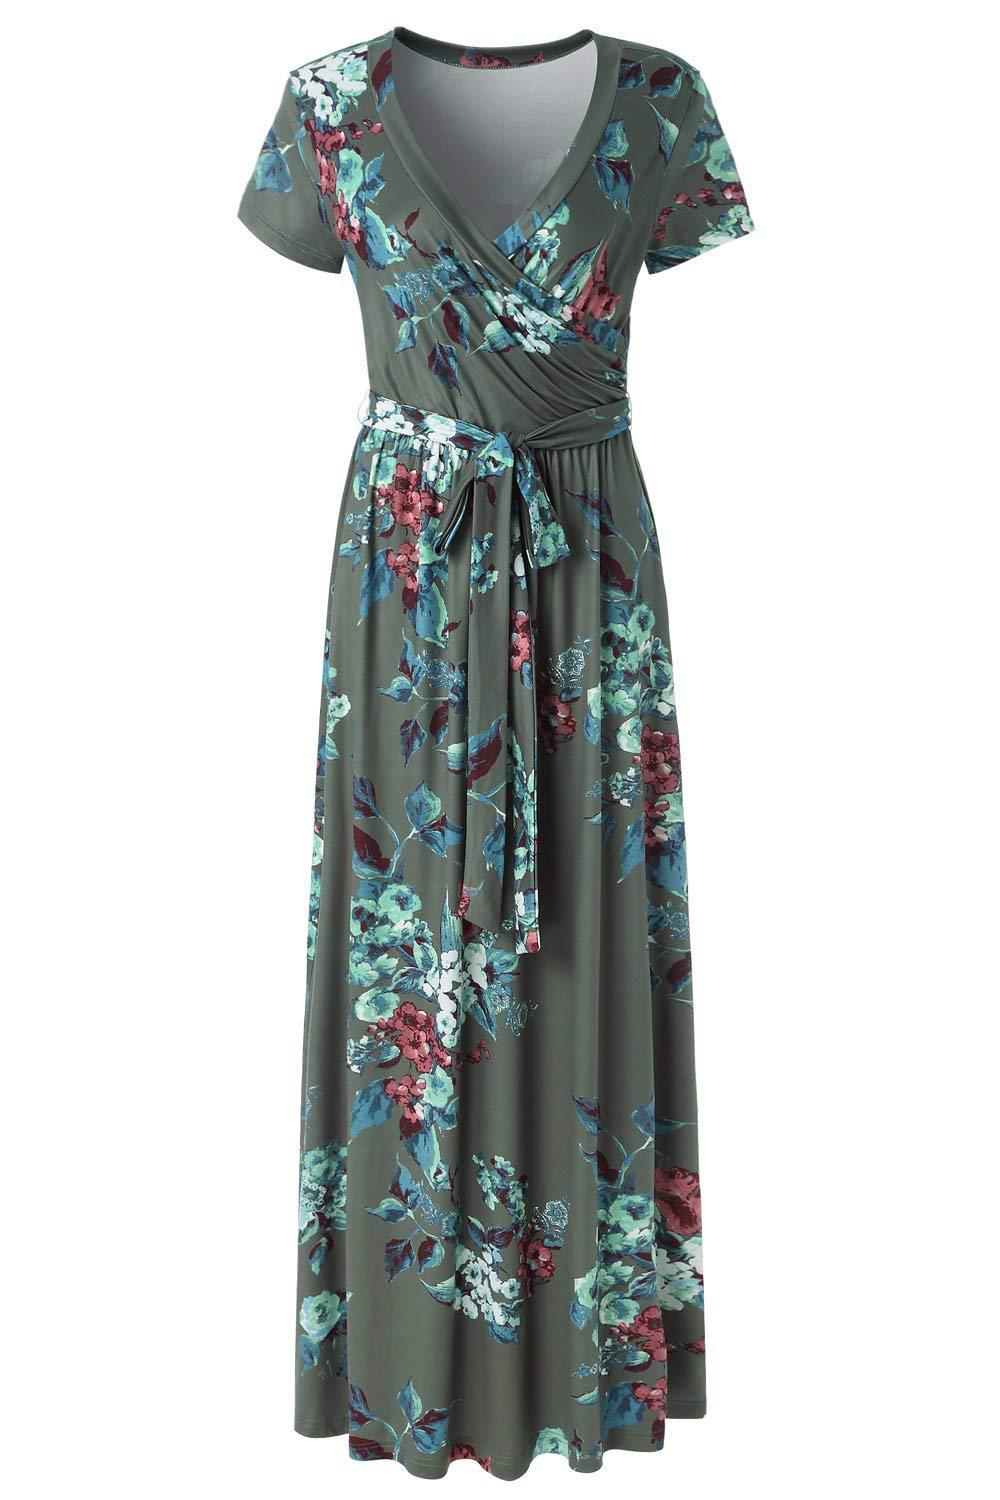 Women Floral Printed Maxi Dress V Neck Short Sleeve Summer Beach Boho Casual Long Dress 4#